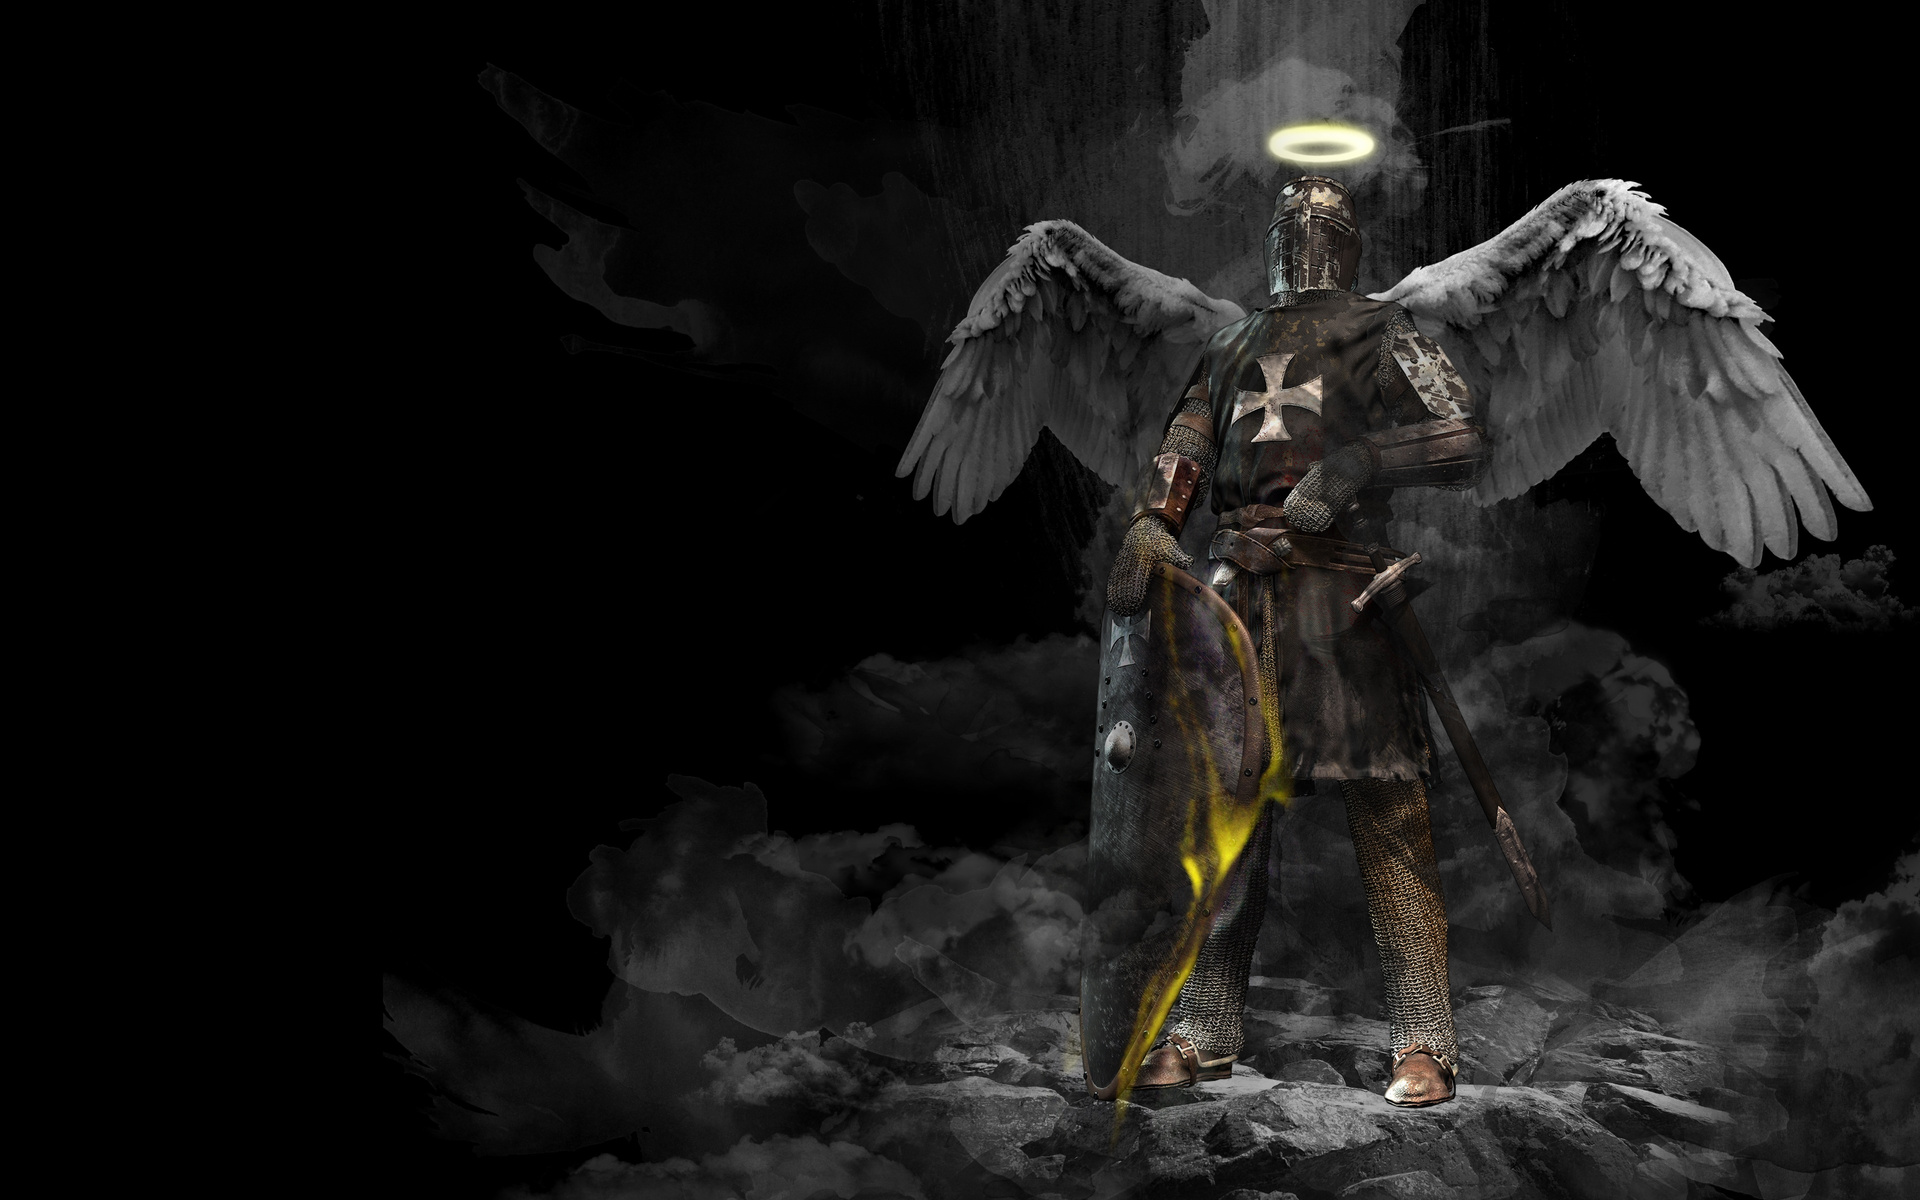 Kight Warrior Angel Illustration In The Dark